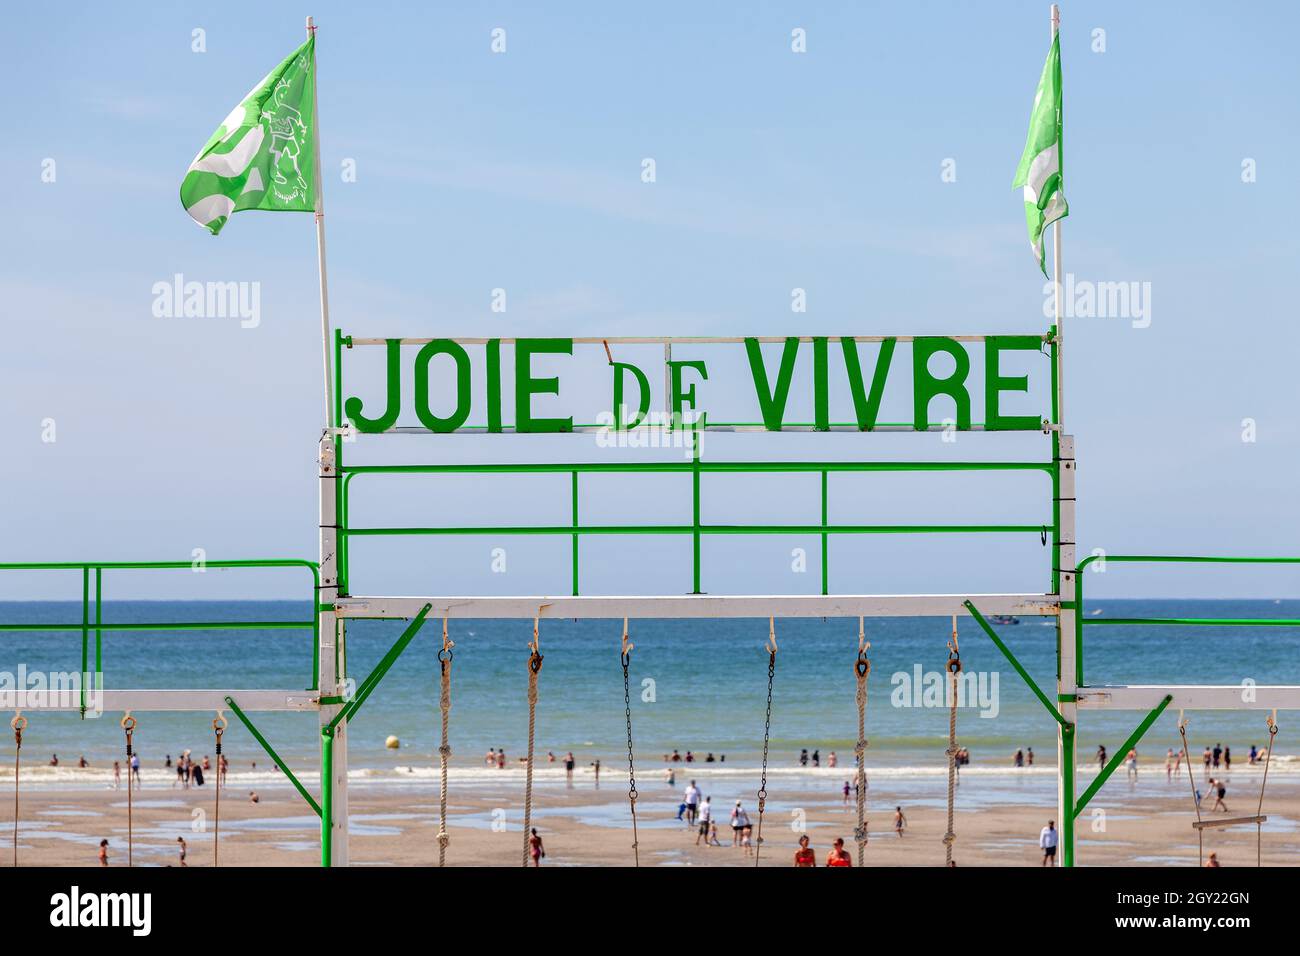 Portal of a playground on the beach, marked 'Joie de Vivre' (joy of living) Stock Photo